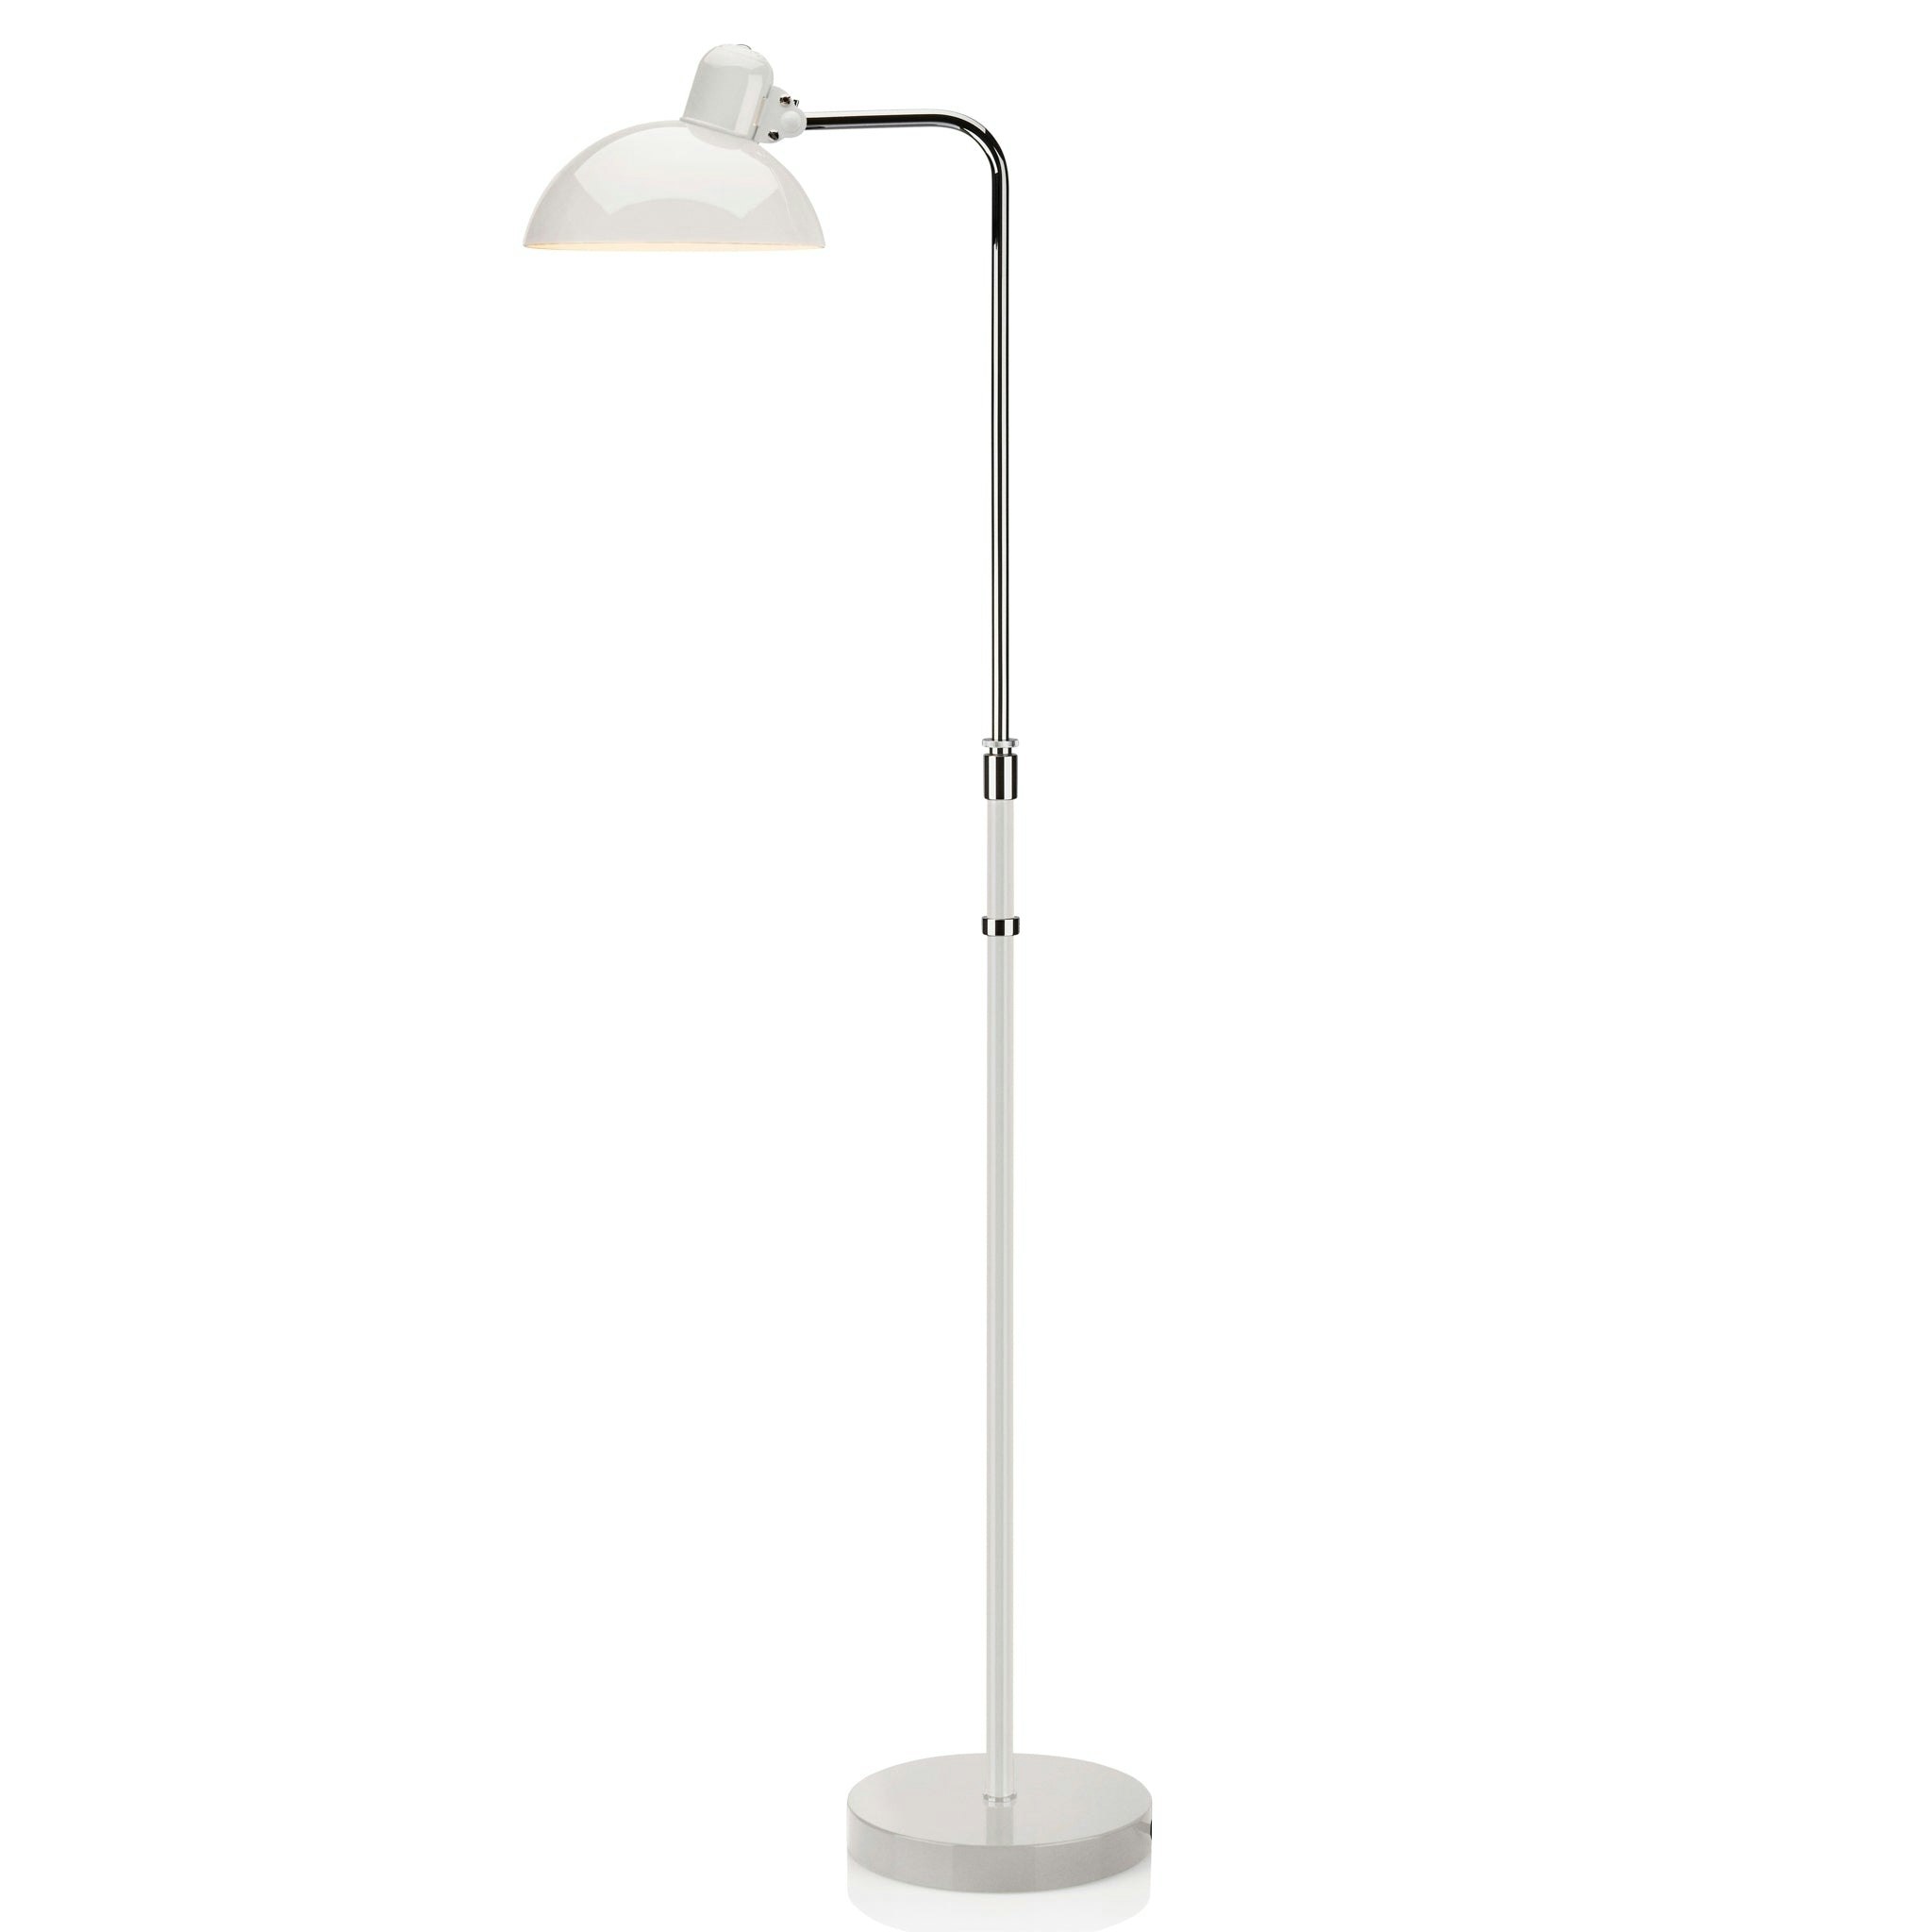 Kaiser Idell Luxus Floor Lamp by Fritz Hansen - clearance